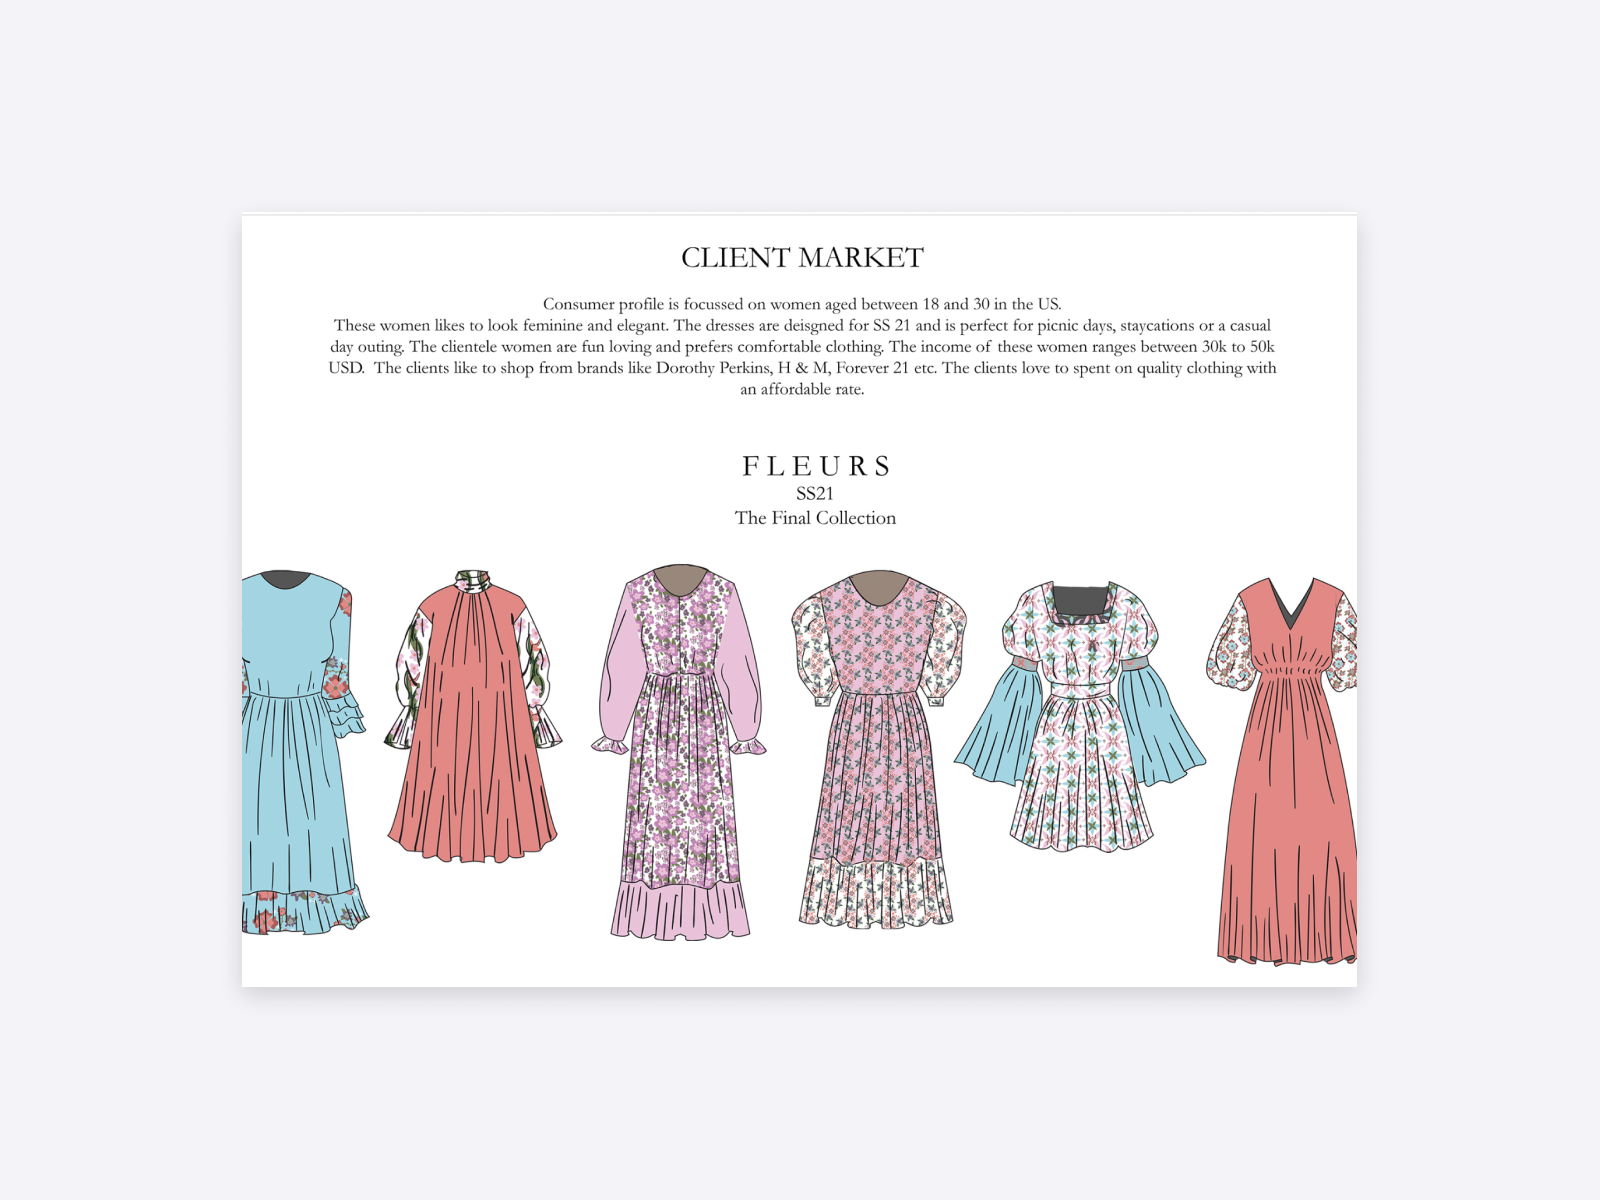 Betsey's fashion portfolio includes client market research.